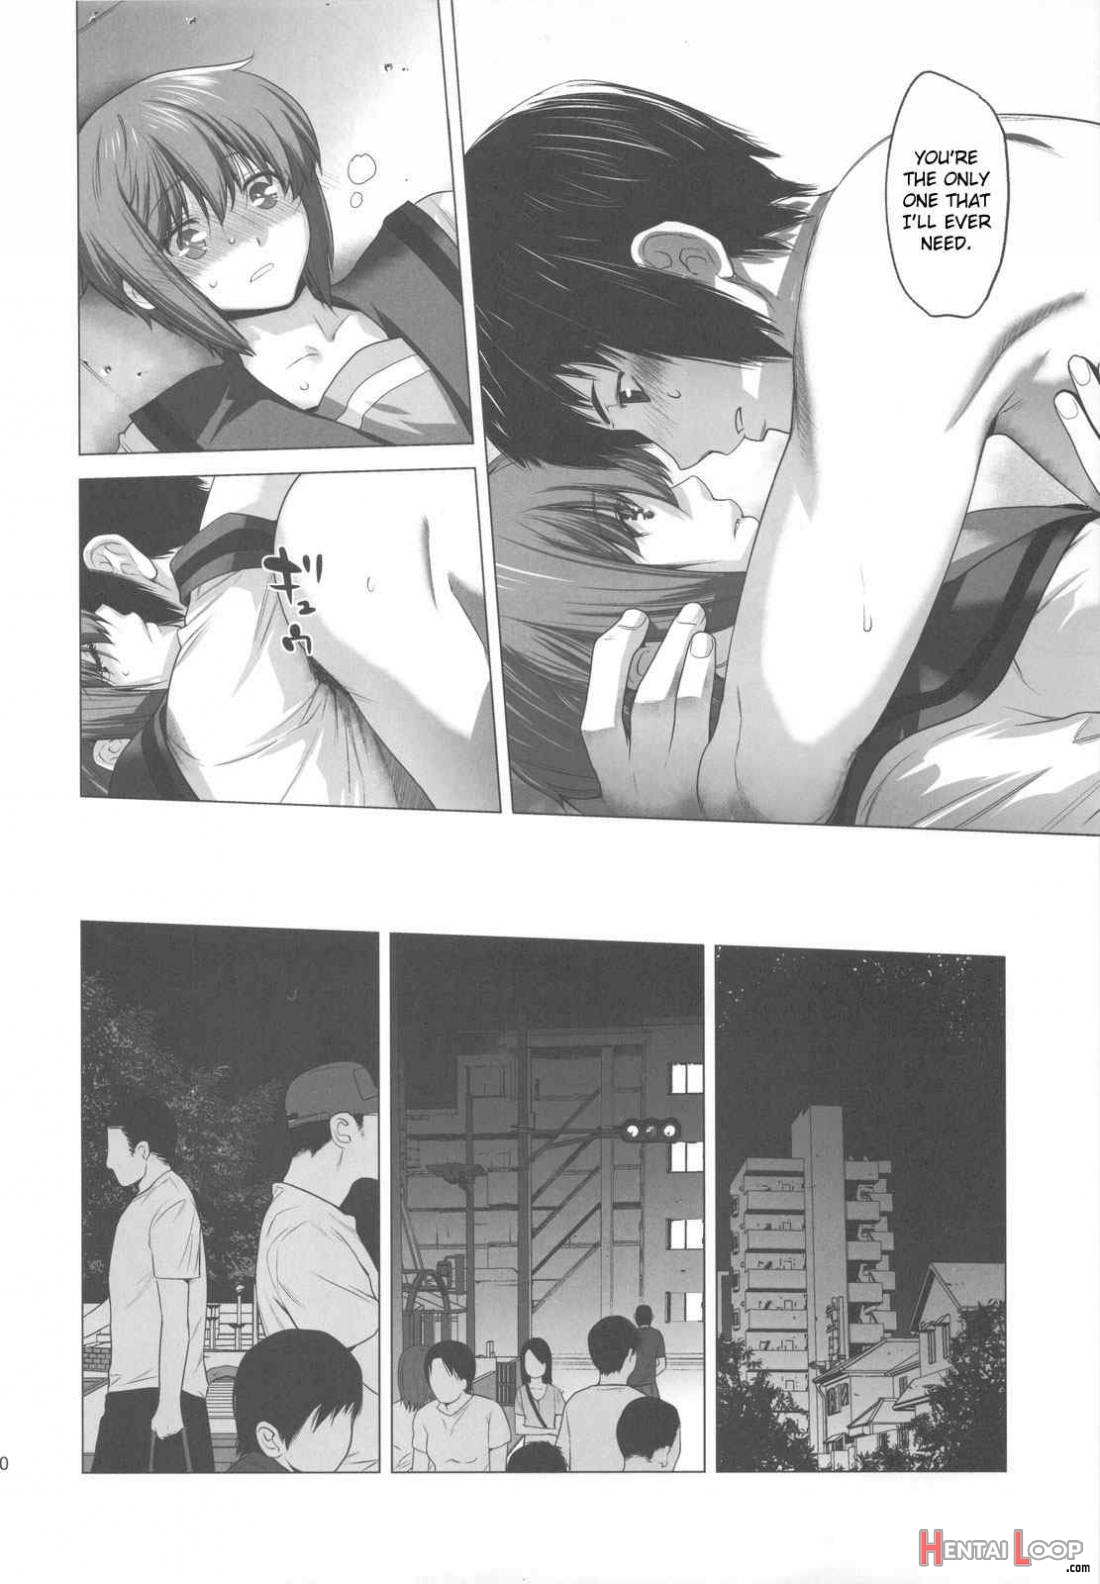 Ore to Nagato 2 page 18